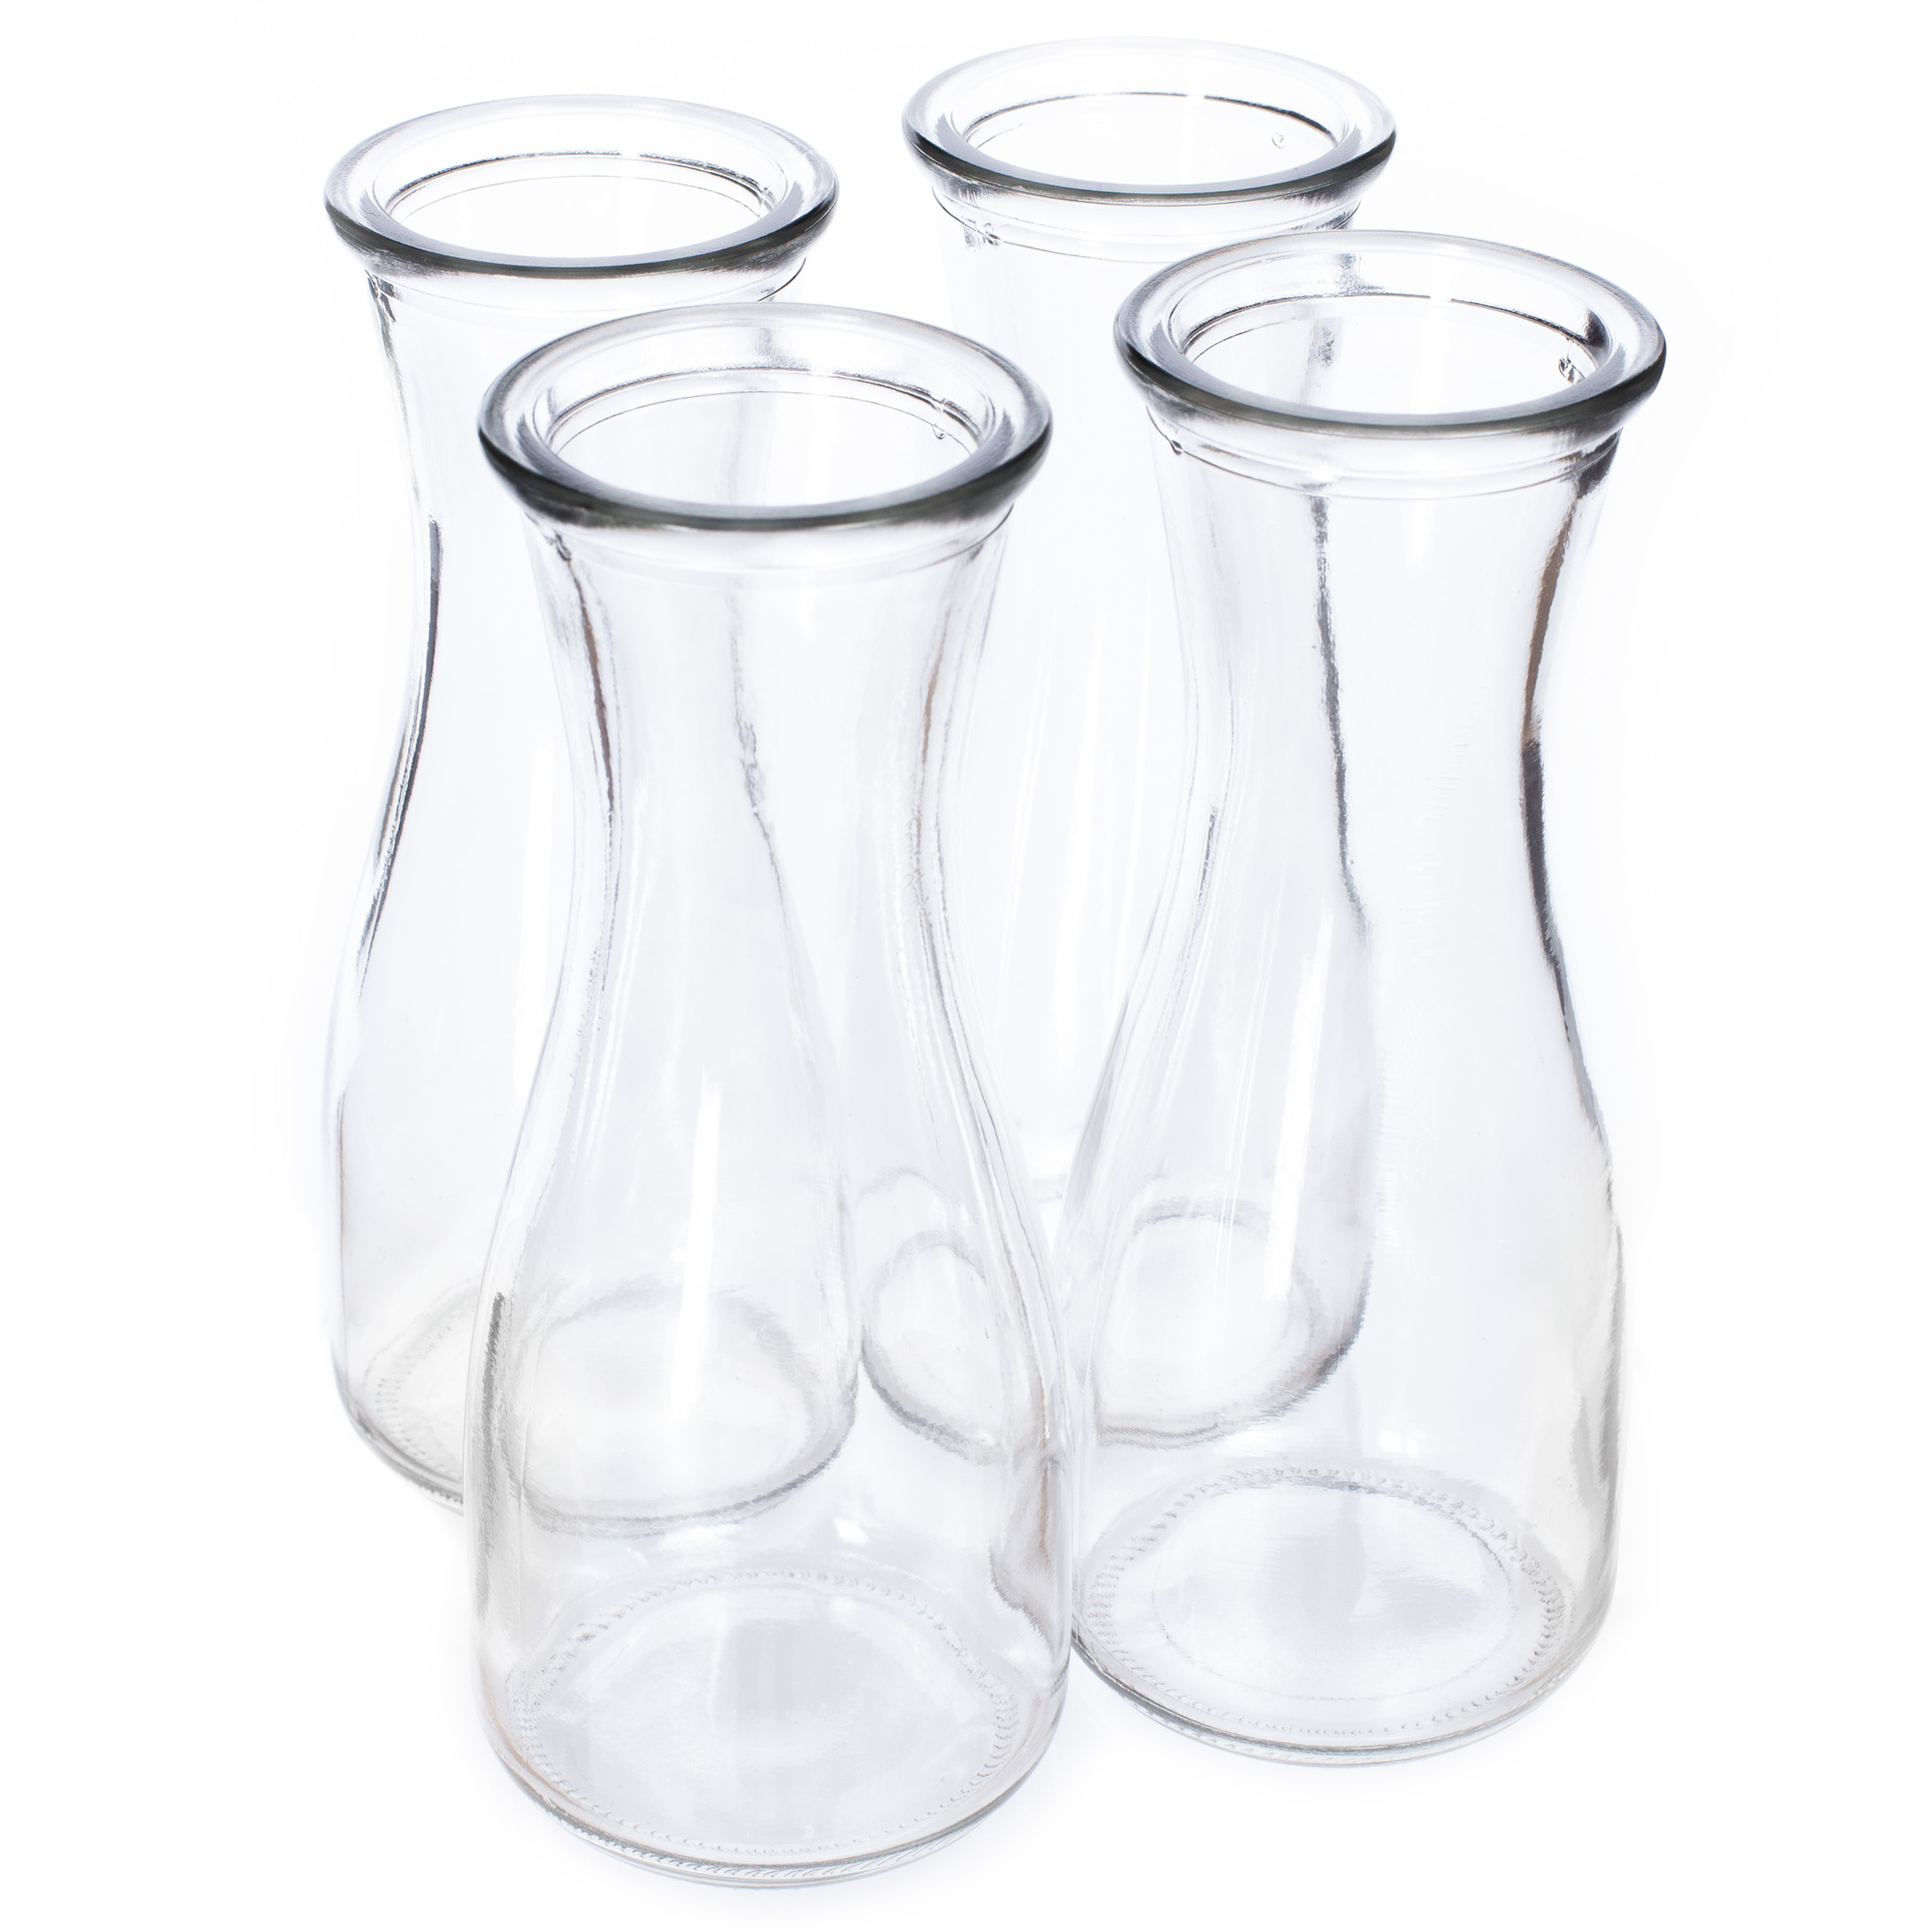 12 oz. (350mL) Glass Beverage Carafe, 4-pack